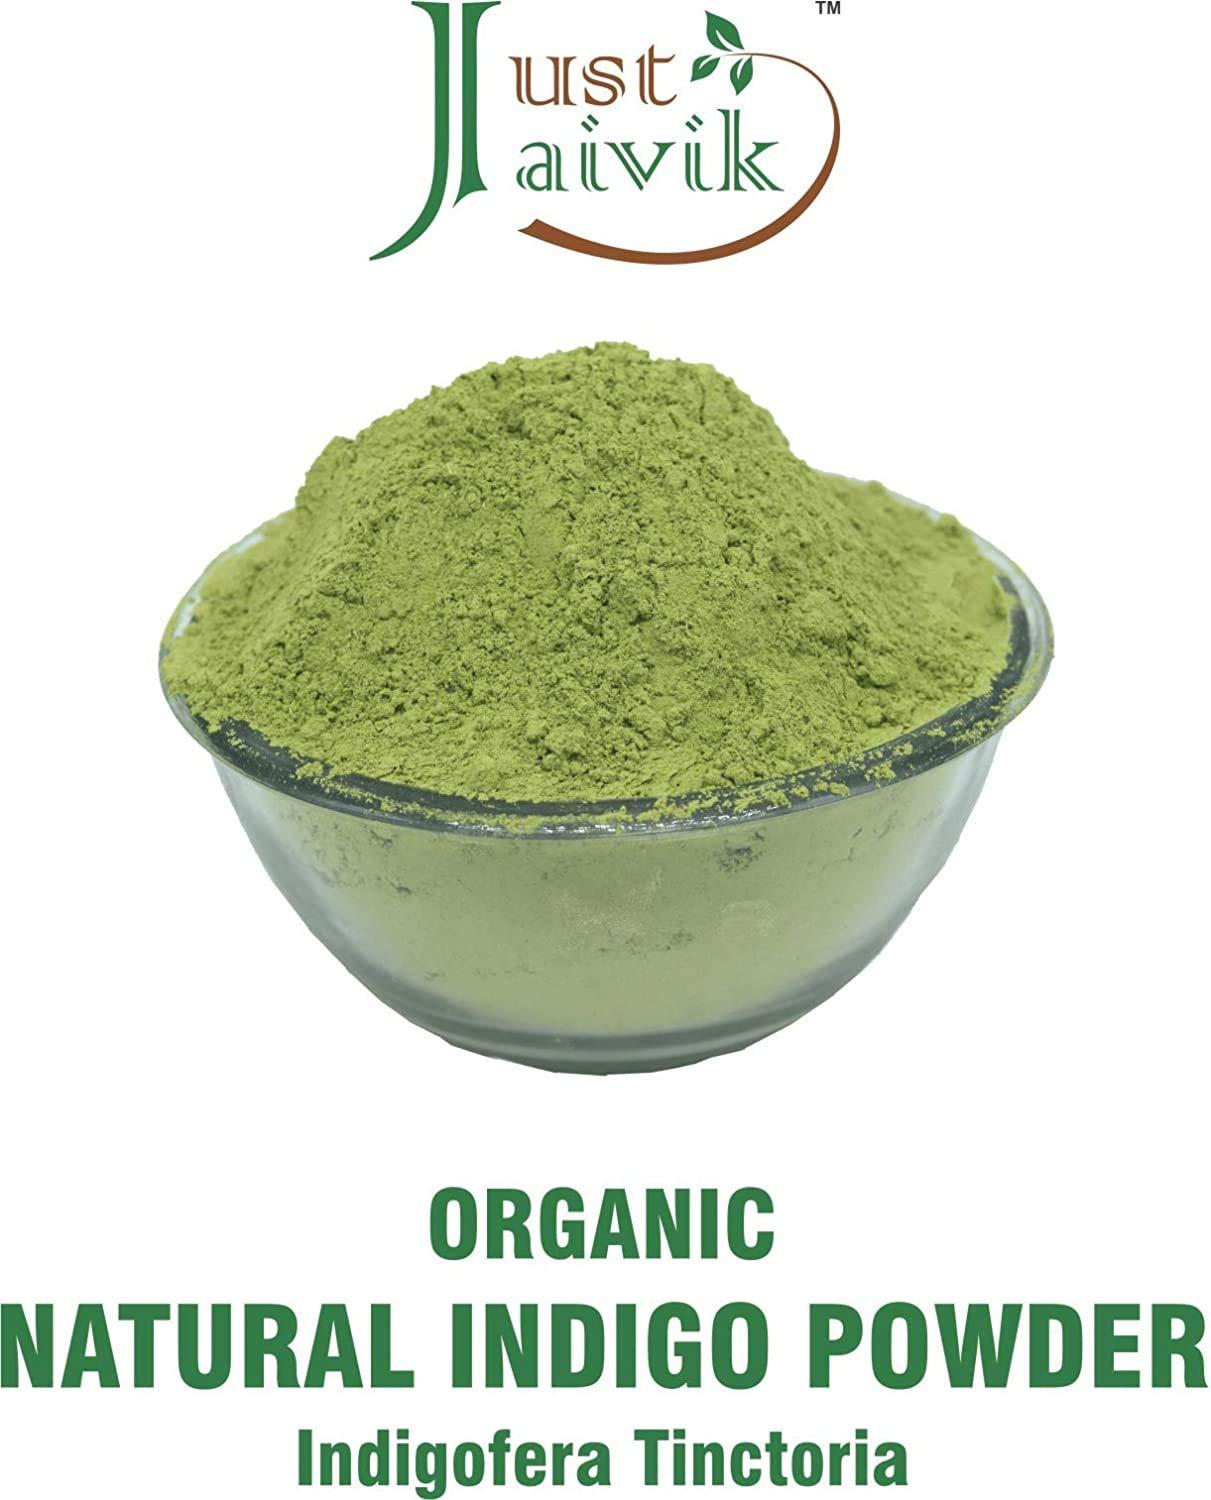 Just Jaivik 100% Organic Indigo Powder - 227 gms / 1/2 LB Pound / 08 Oz -  Indigofera Tinctoria- A 100% Organic Hair Dye - Color your hair dark brown